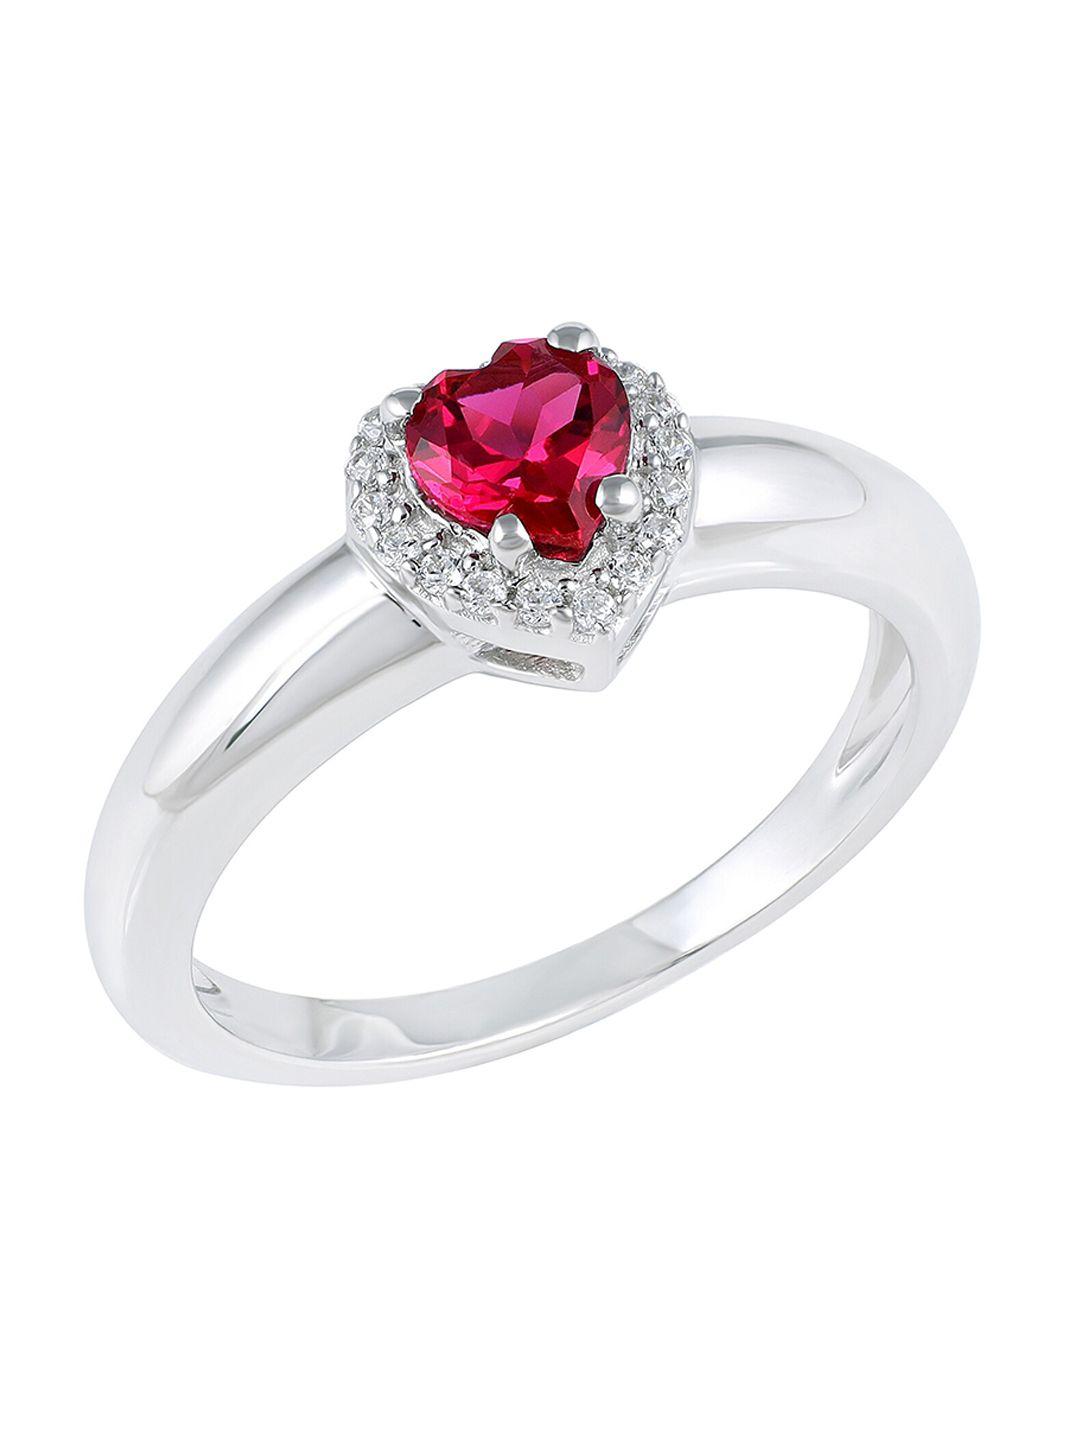 la soula 92.5 sterling silver brazil ruby-studded finger ring